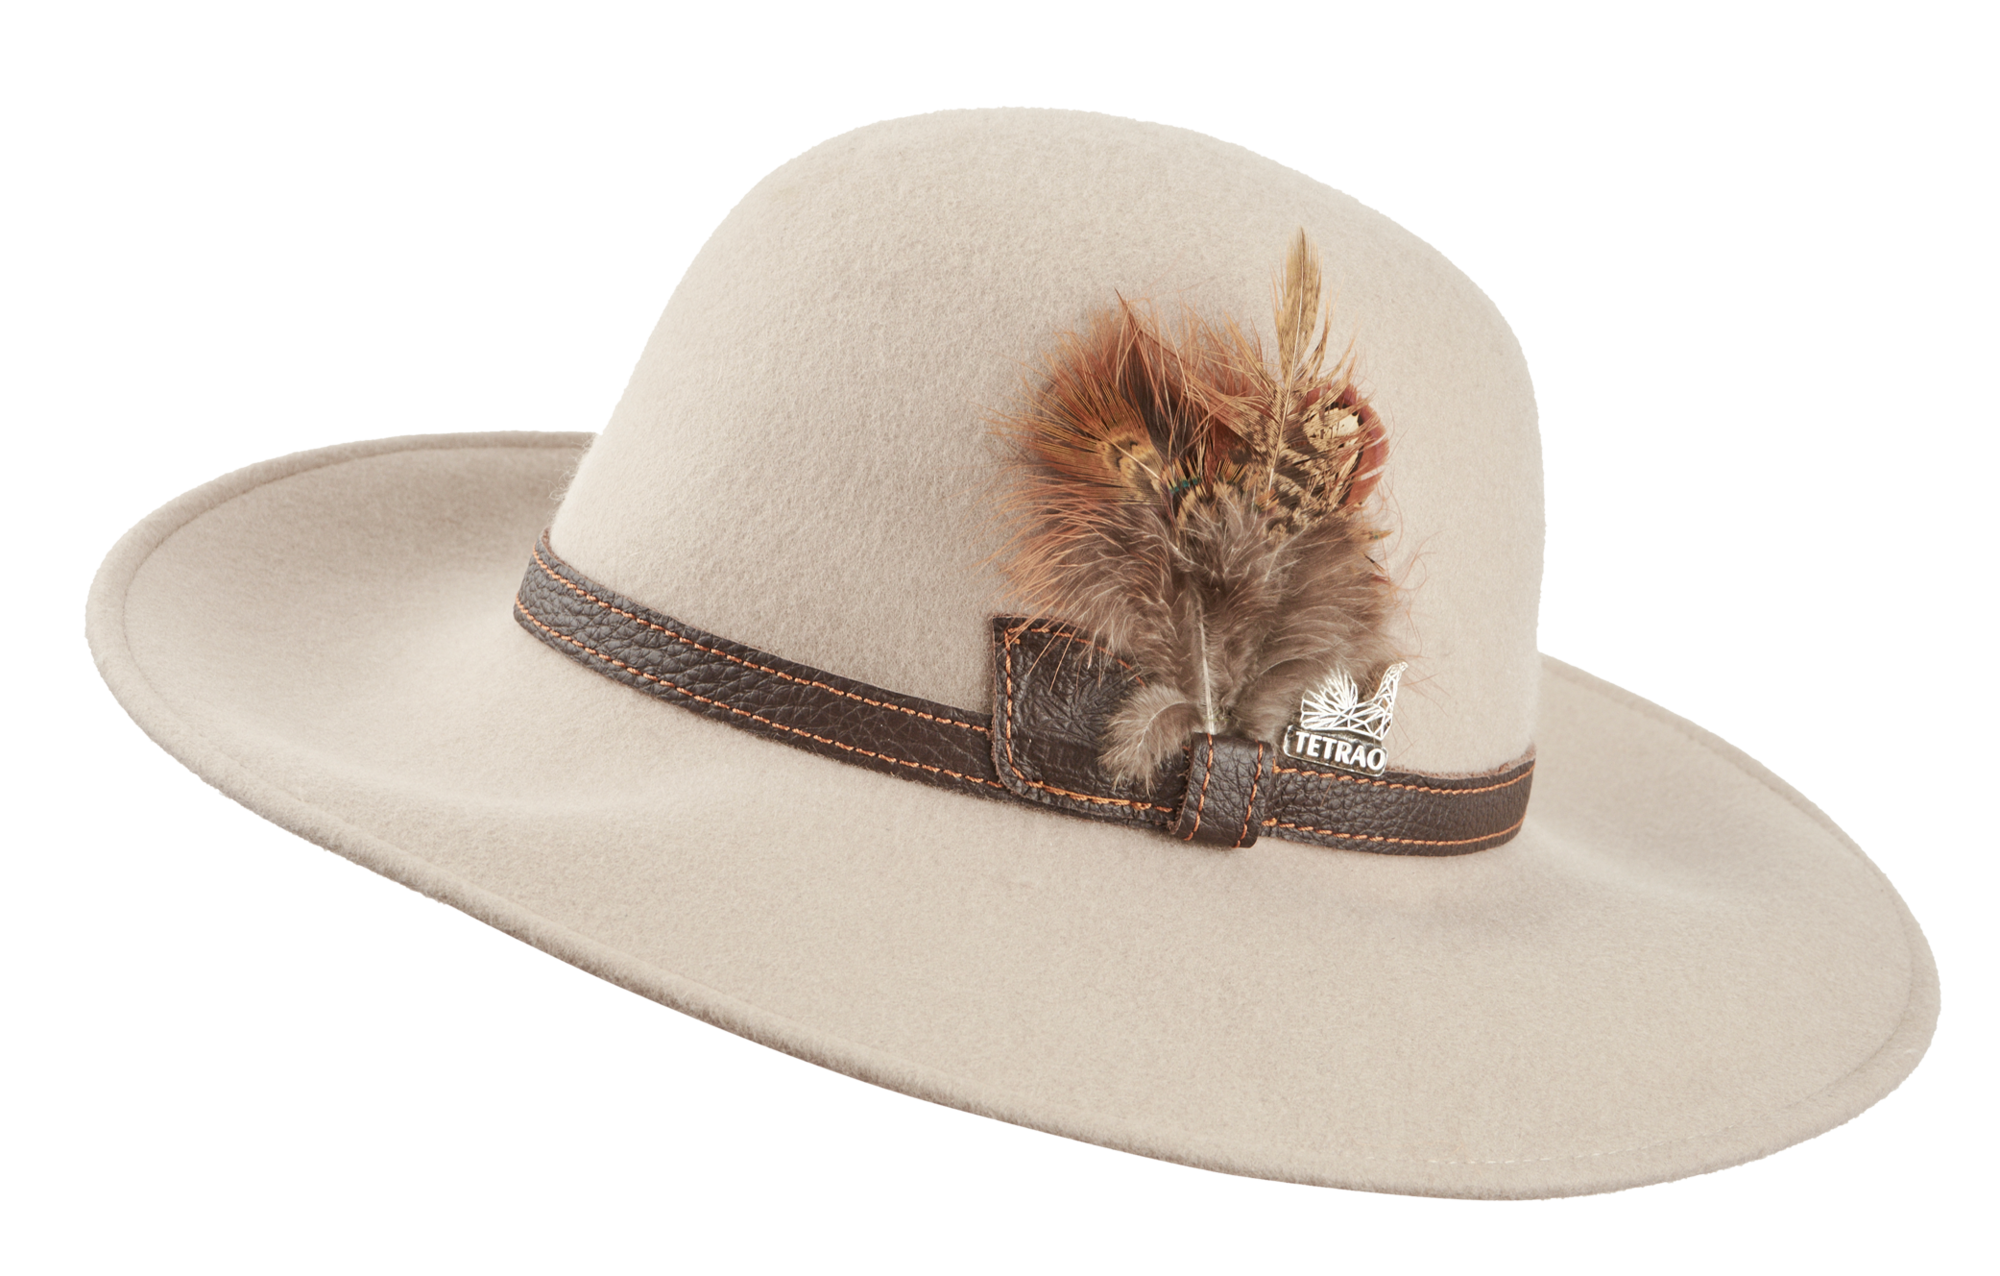 Dámsky poľovnícky klobúk TETRAO - béžový 55  